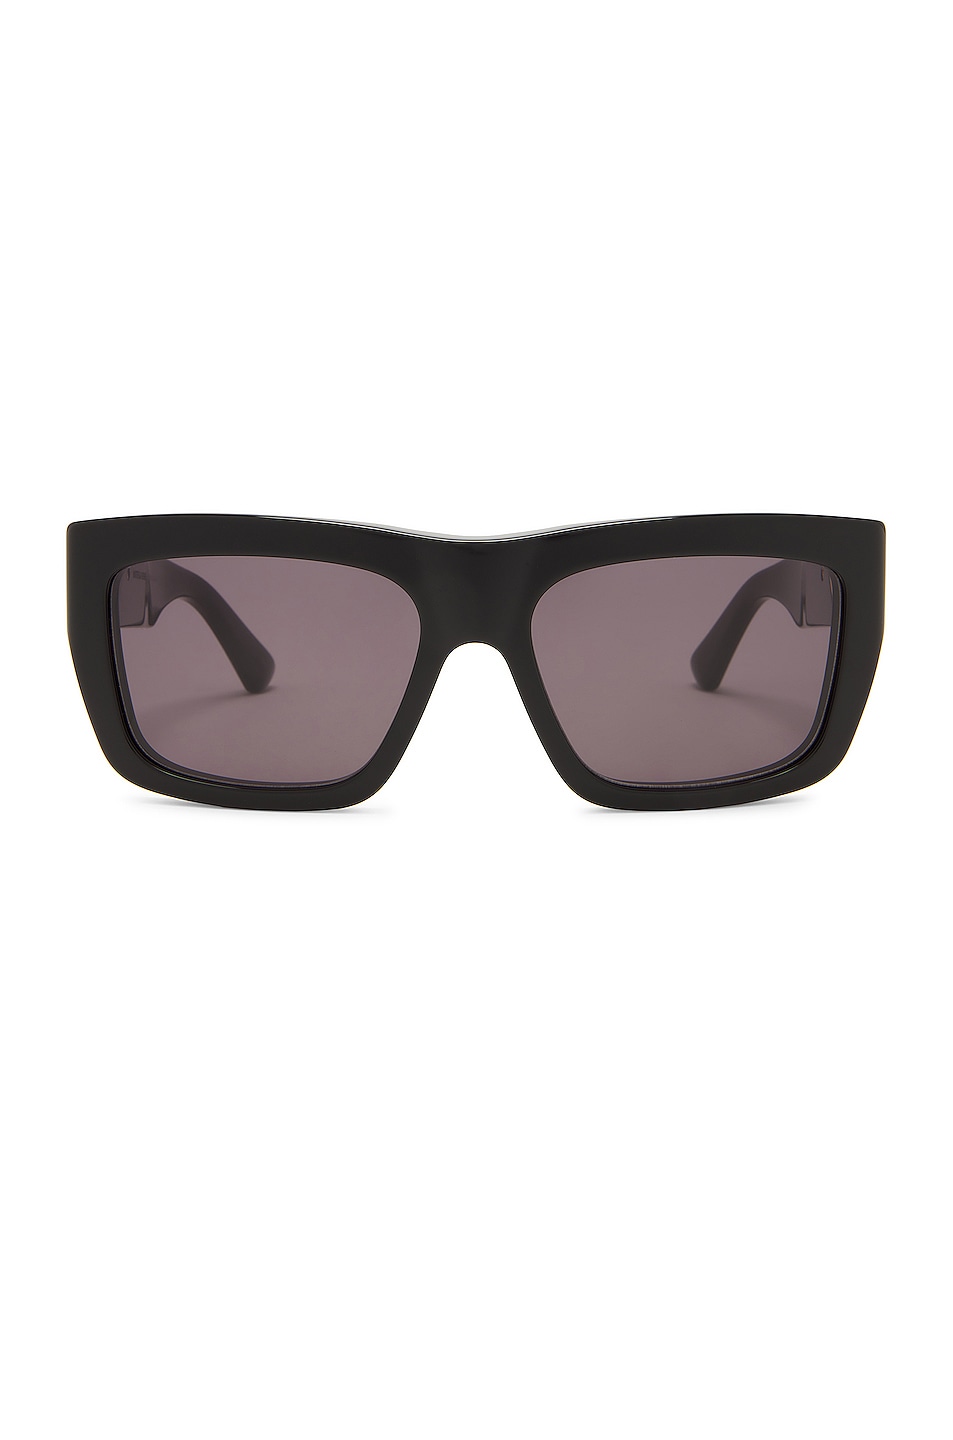 New Triangle Acetate Sunglasses in Black